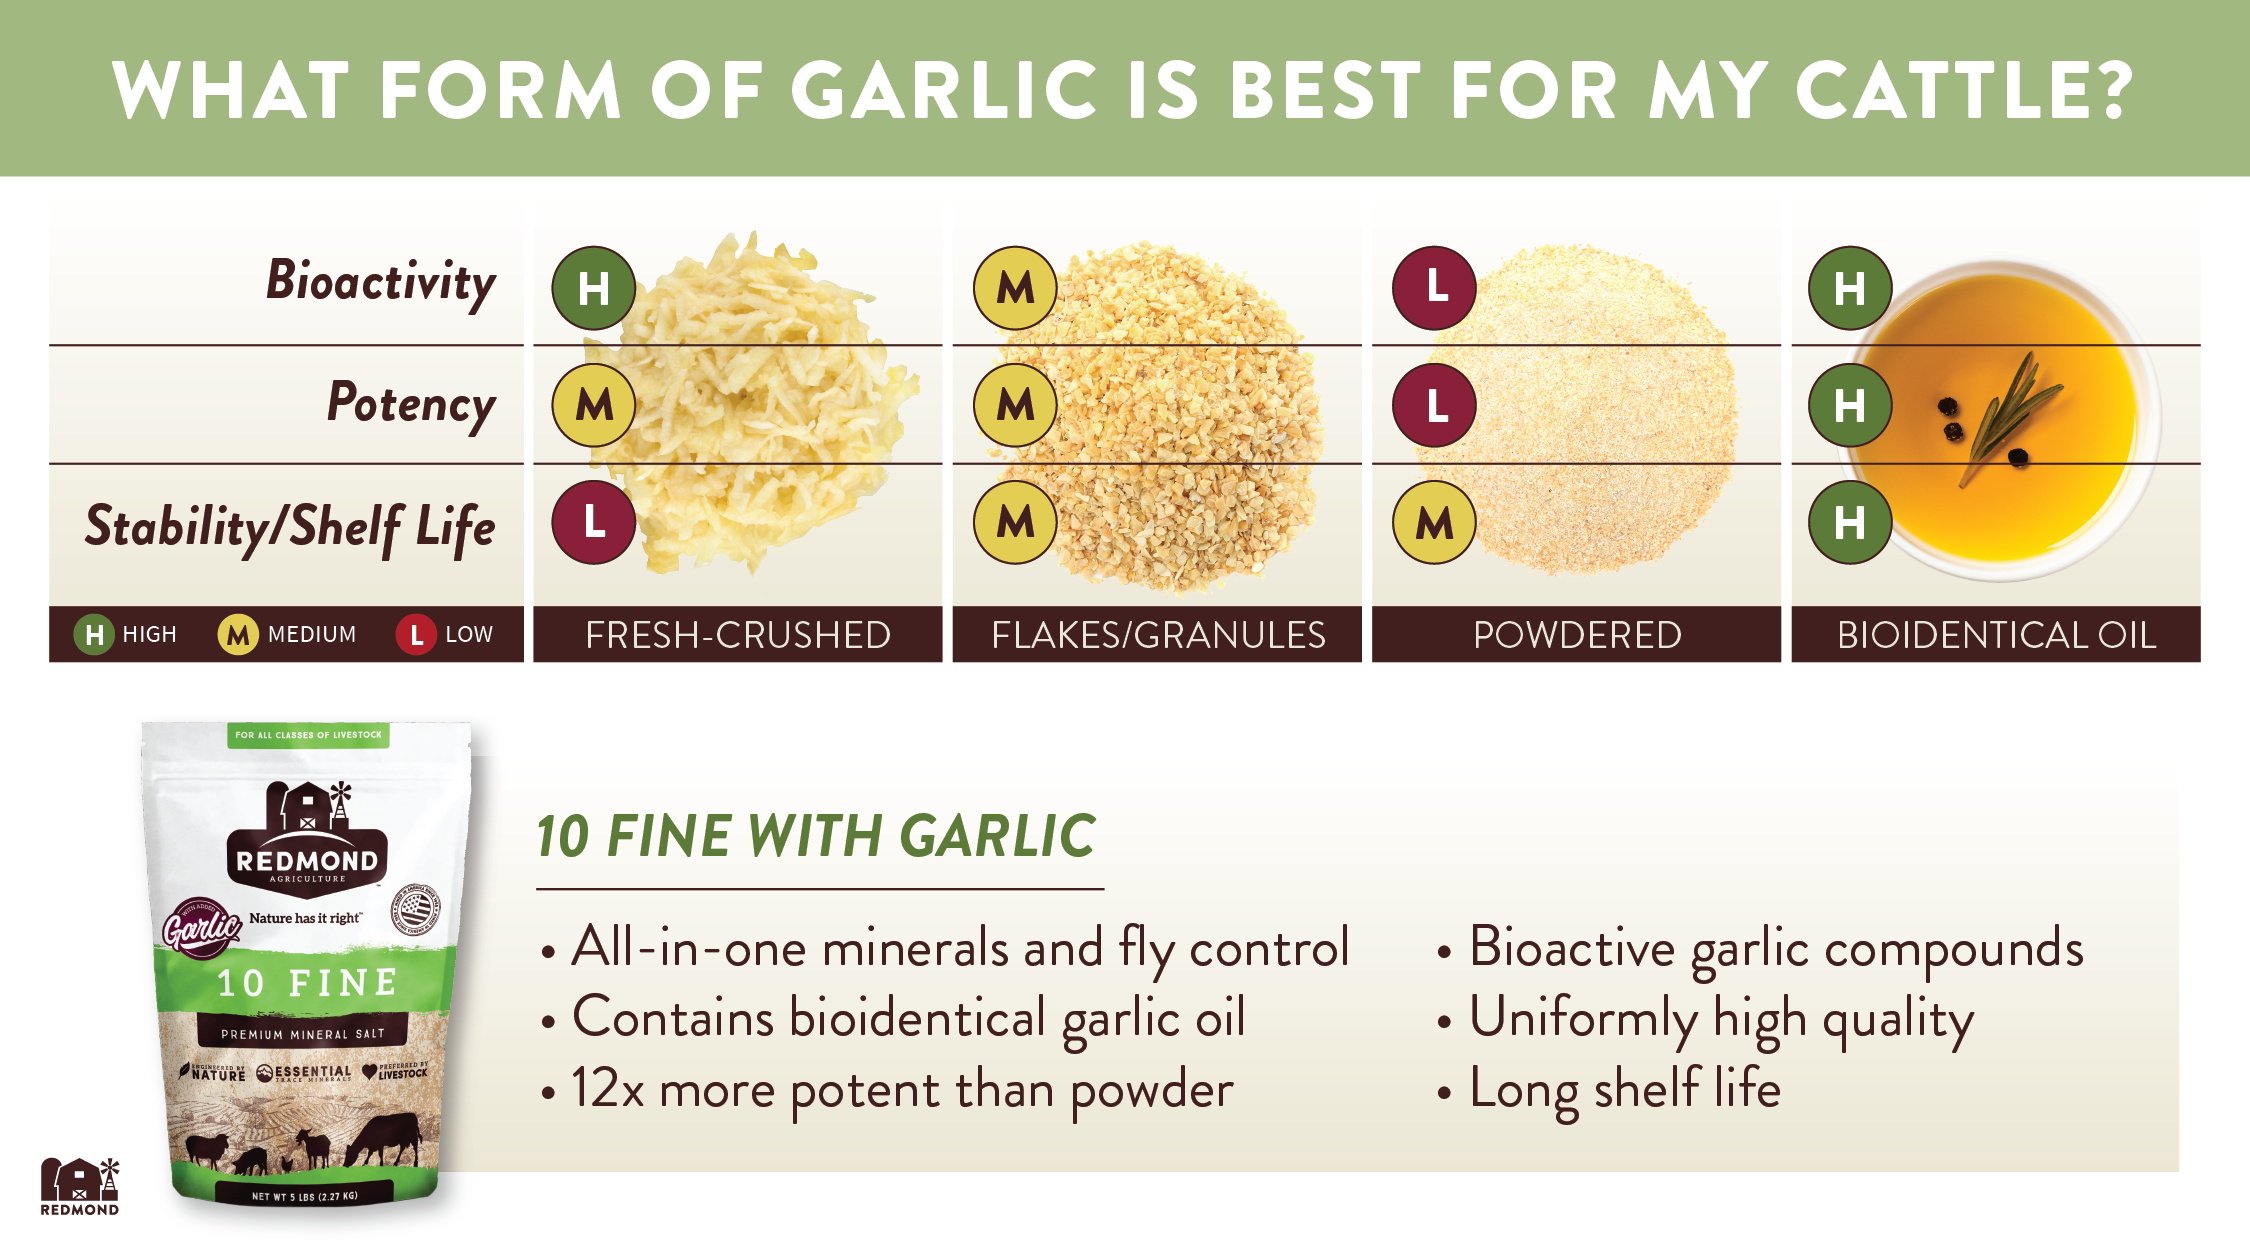 https://blog.redmondagriculture.com/hs-fs/hubfs/Garlic%20for%20Cattle-01-1.png?width=2250&height=1250&name=Garlic%20for%20Cattle-01-1.png